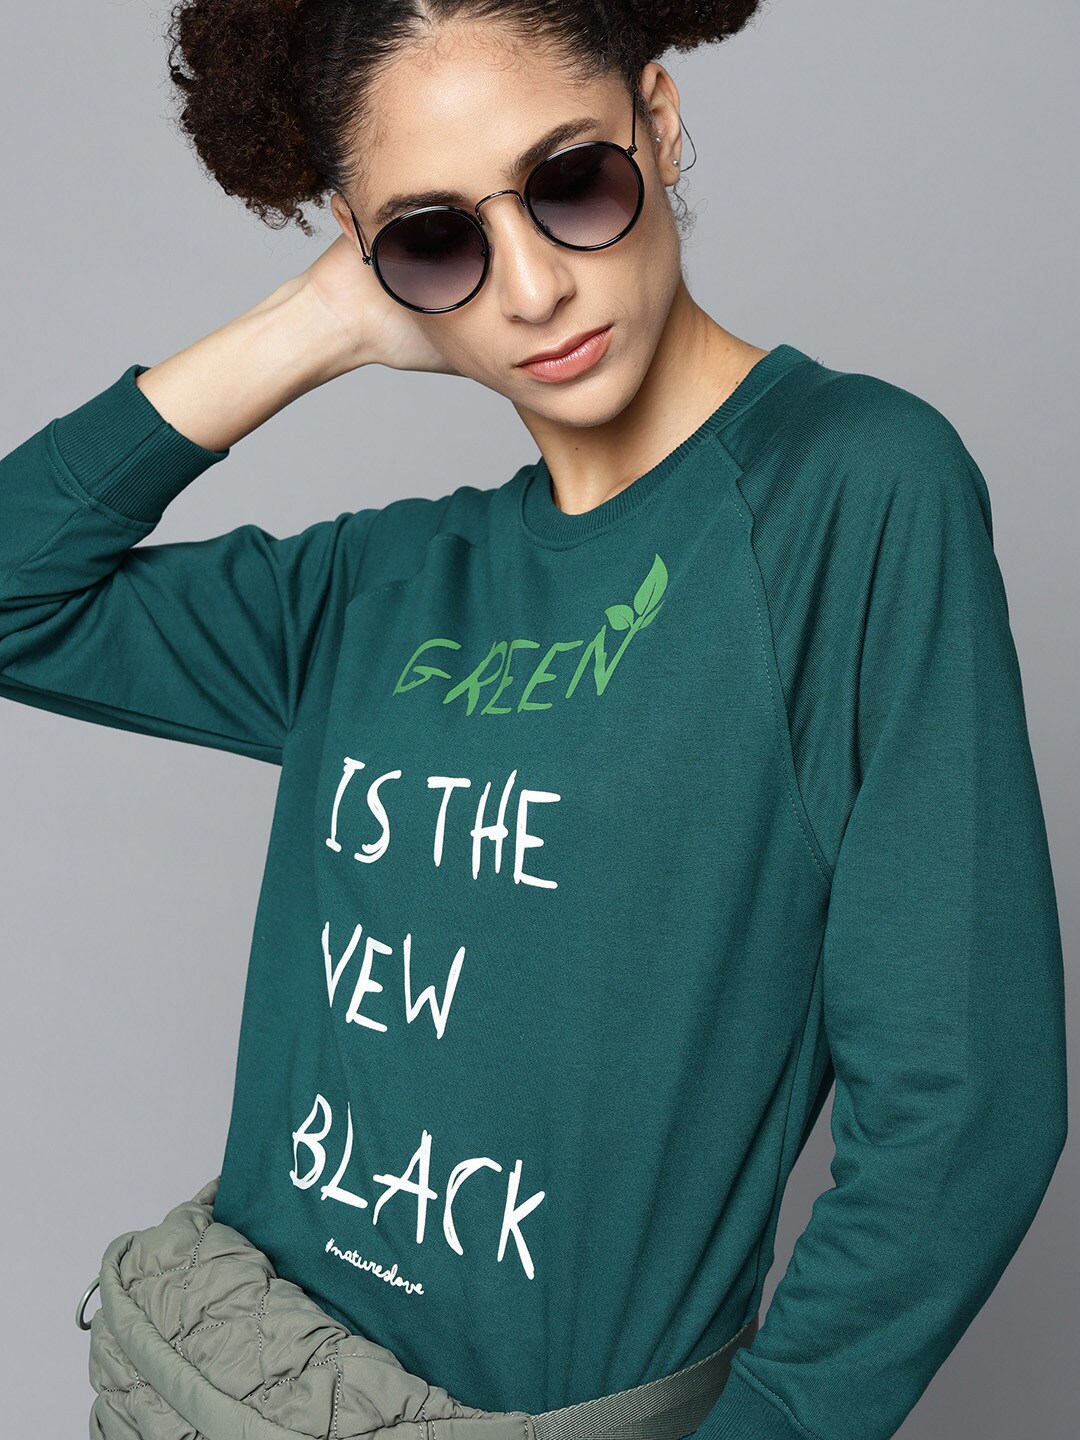 Kook N Keech Women Teal Green & White Typographic Print Sweatshirt Price in India